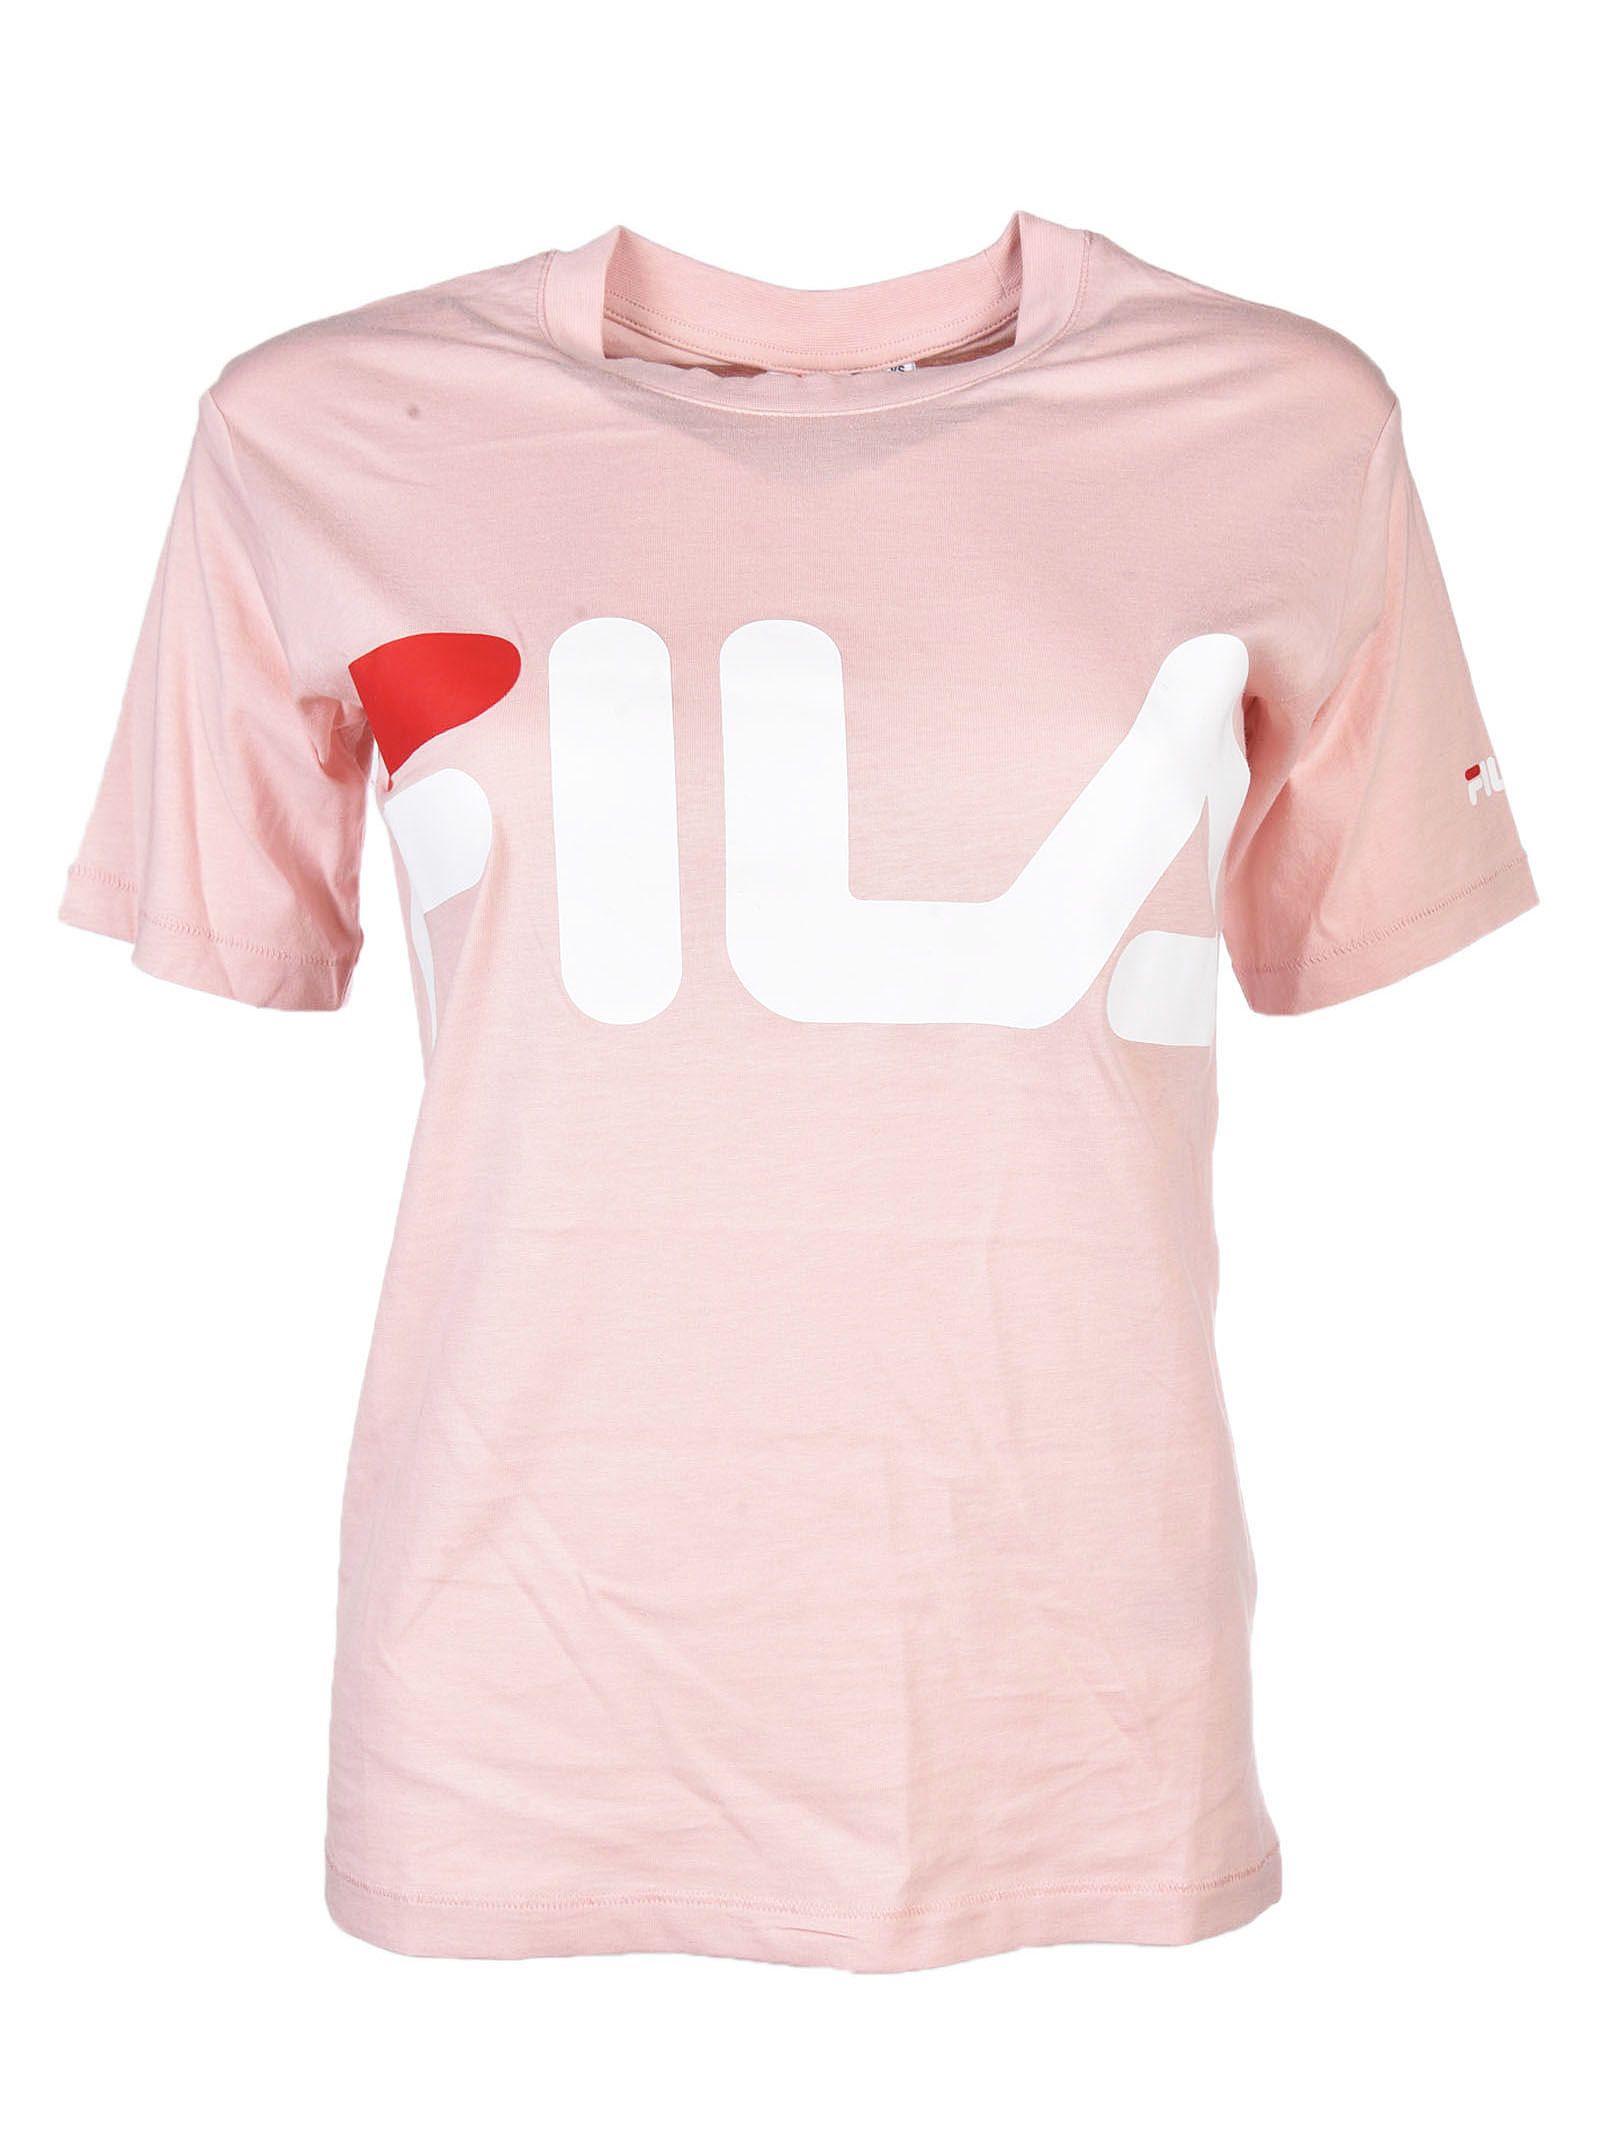 pink fila shirt womens